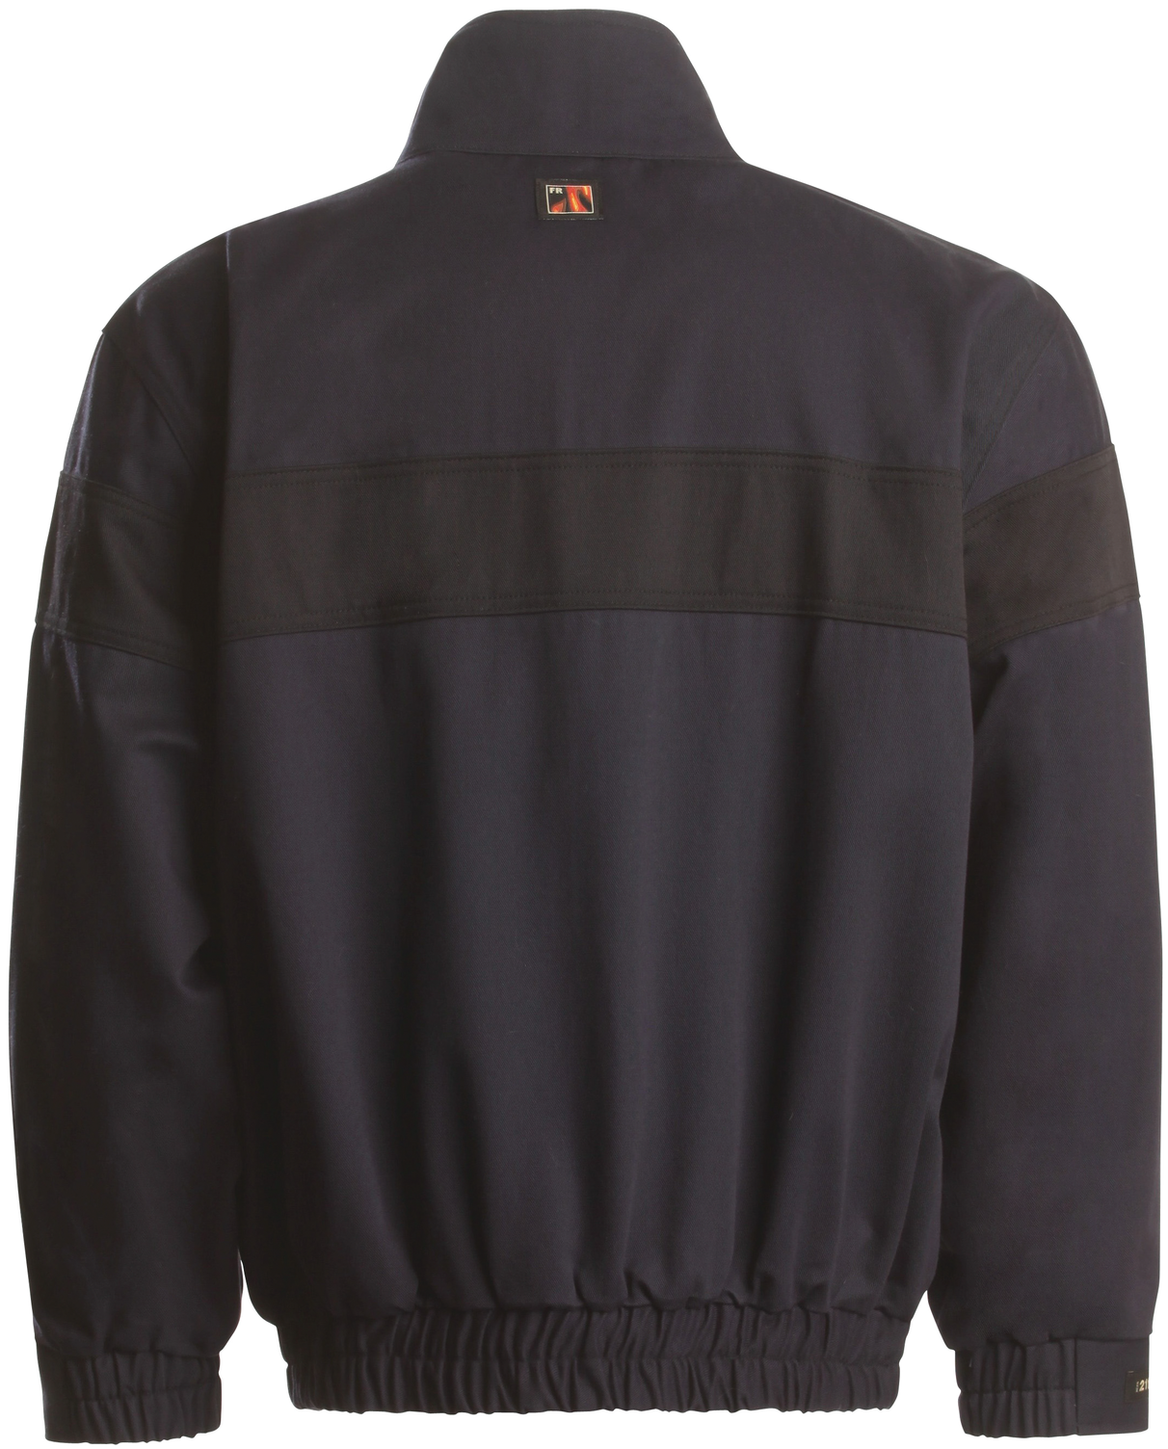 Workrite Arc Flash Jacket 300UT95/3009 - 9.5 oz Indura Ultra Soft -  DISCONTINUED — Coat Size: S — Legion Safety Products